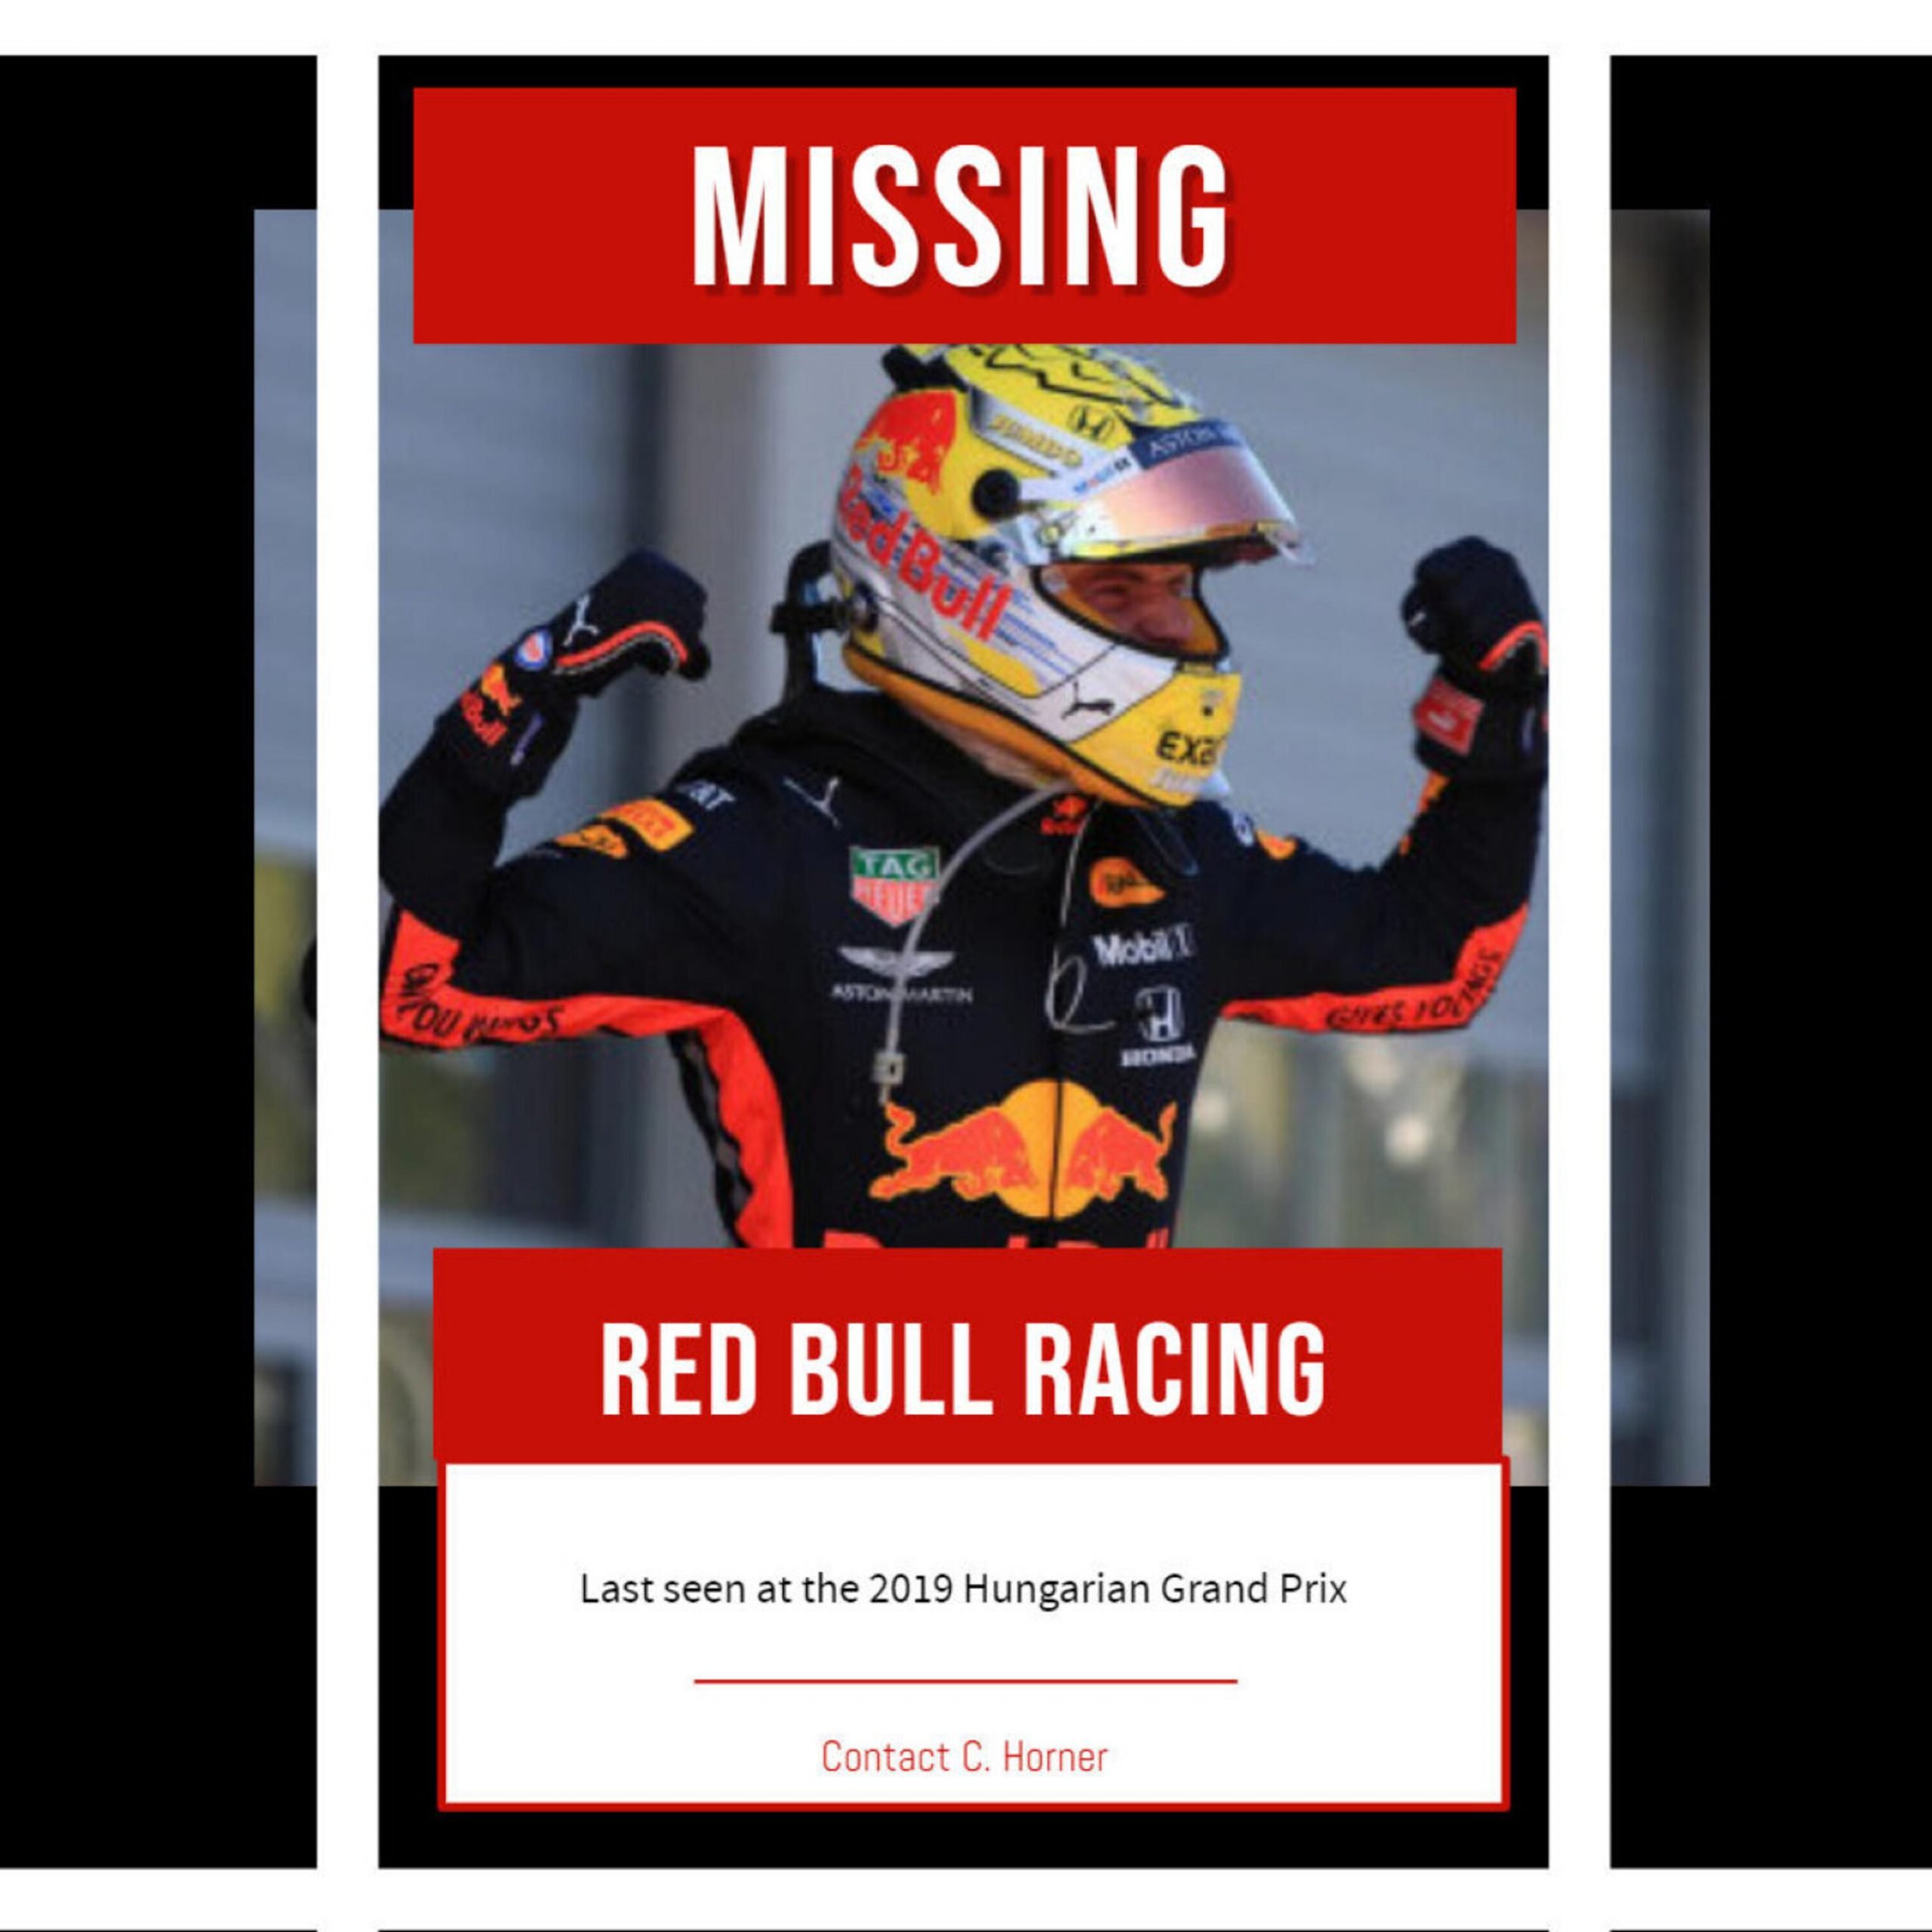 36: Red Bull Racing Go Red Bull Missing